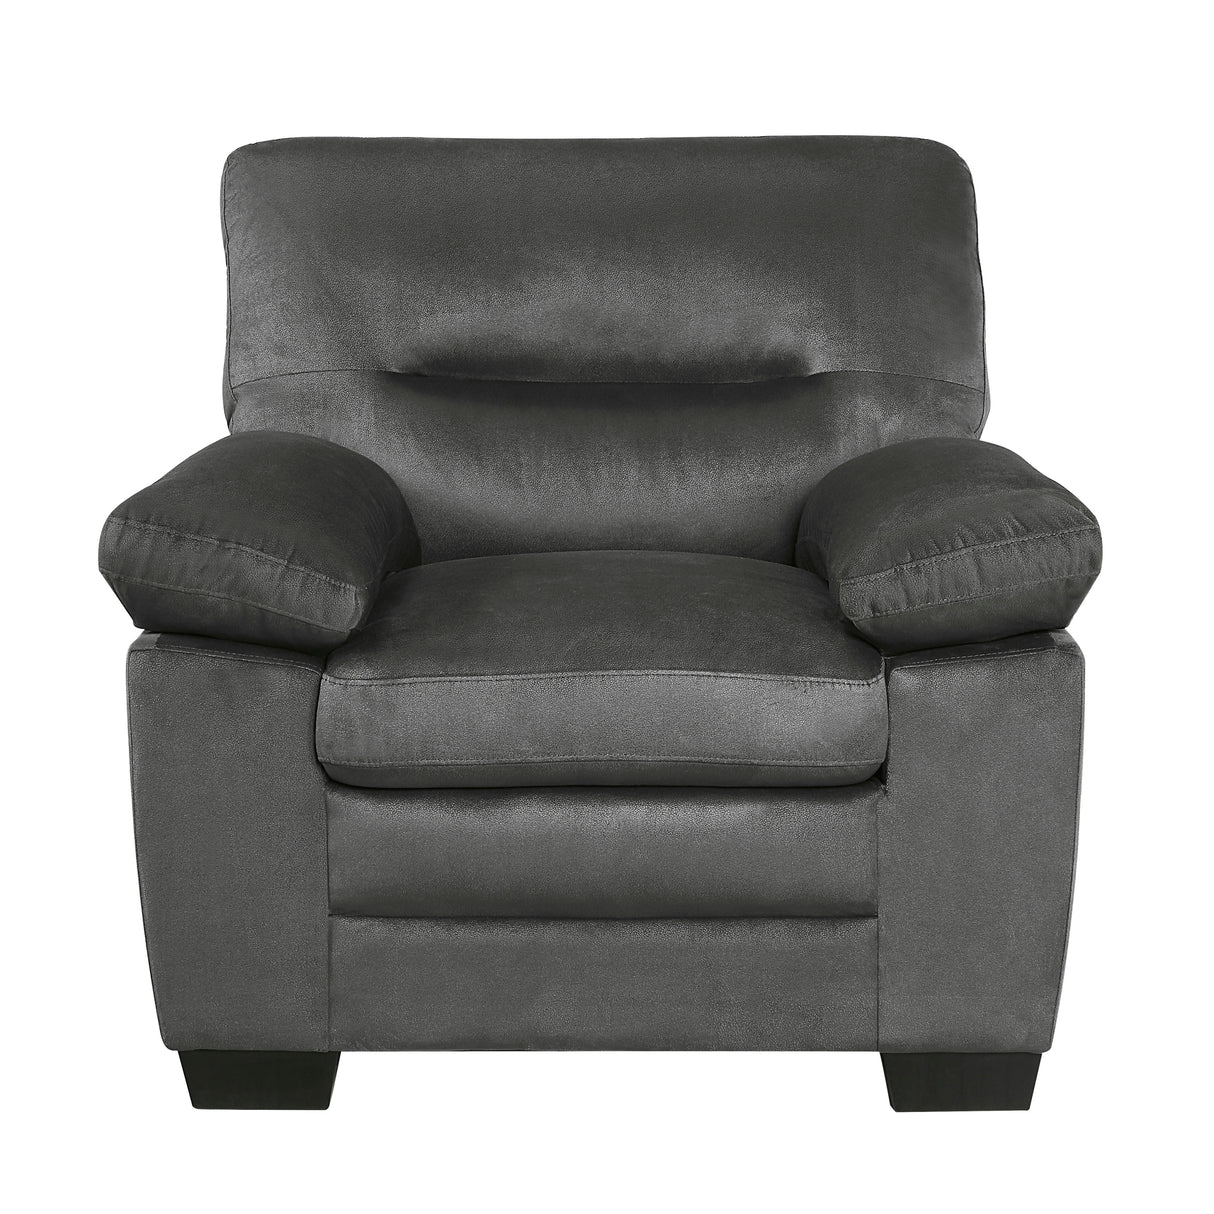 Modern Sleek Design Living Room Furniture 1pc Chair Dark Gray Fabric Upholstered Comfortable Plush Seating - Home Elegance USA